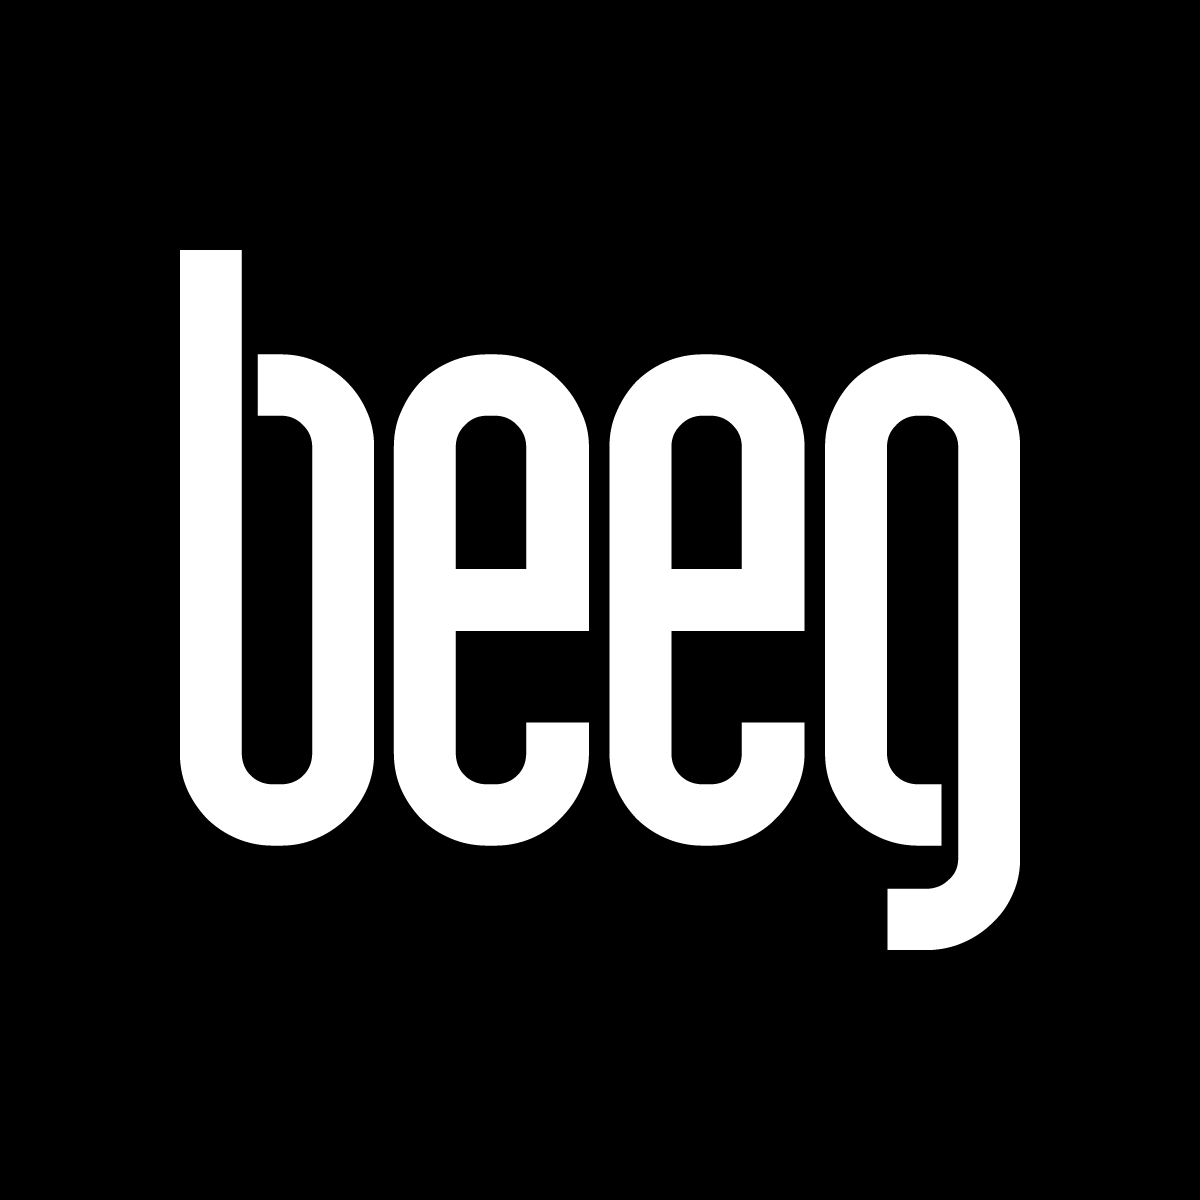 Beeg Sex Image Hq